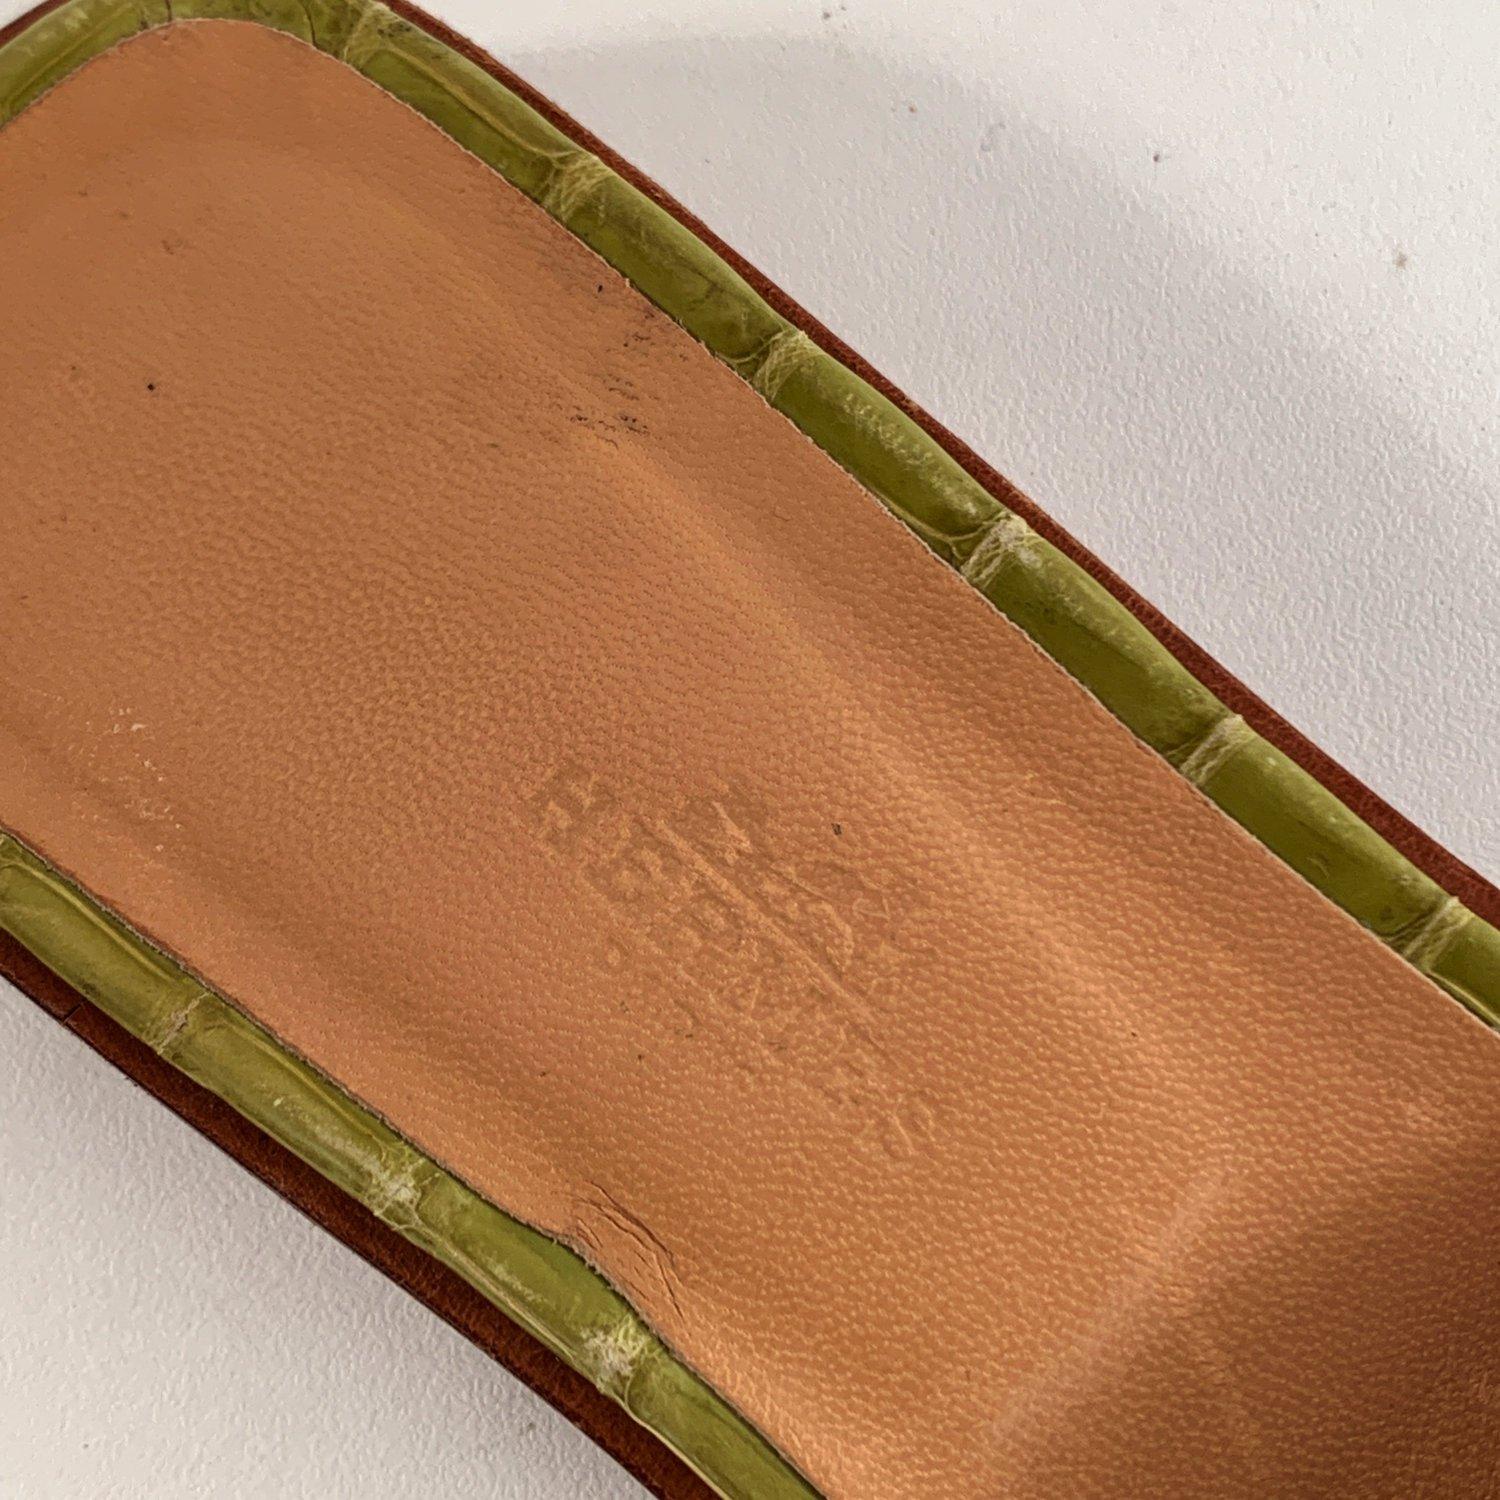 Brown Hermes Green Leather Oran Flat Slide Sandals Slip On Shoes Size 36